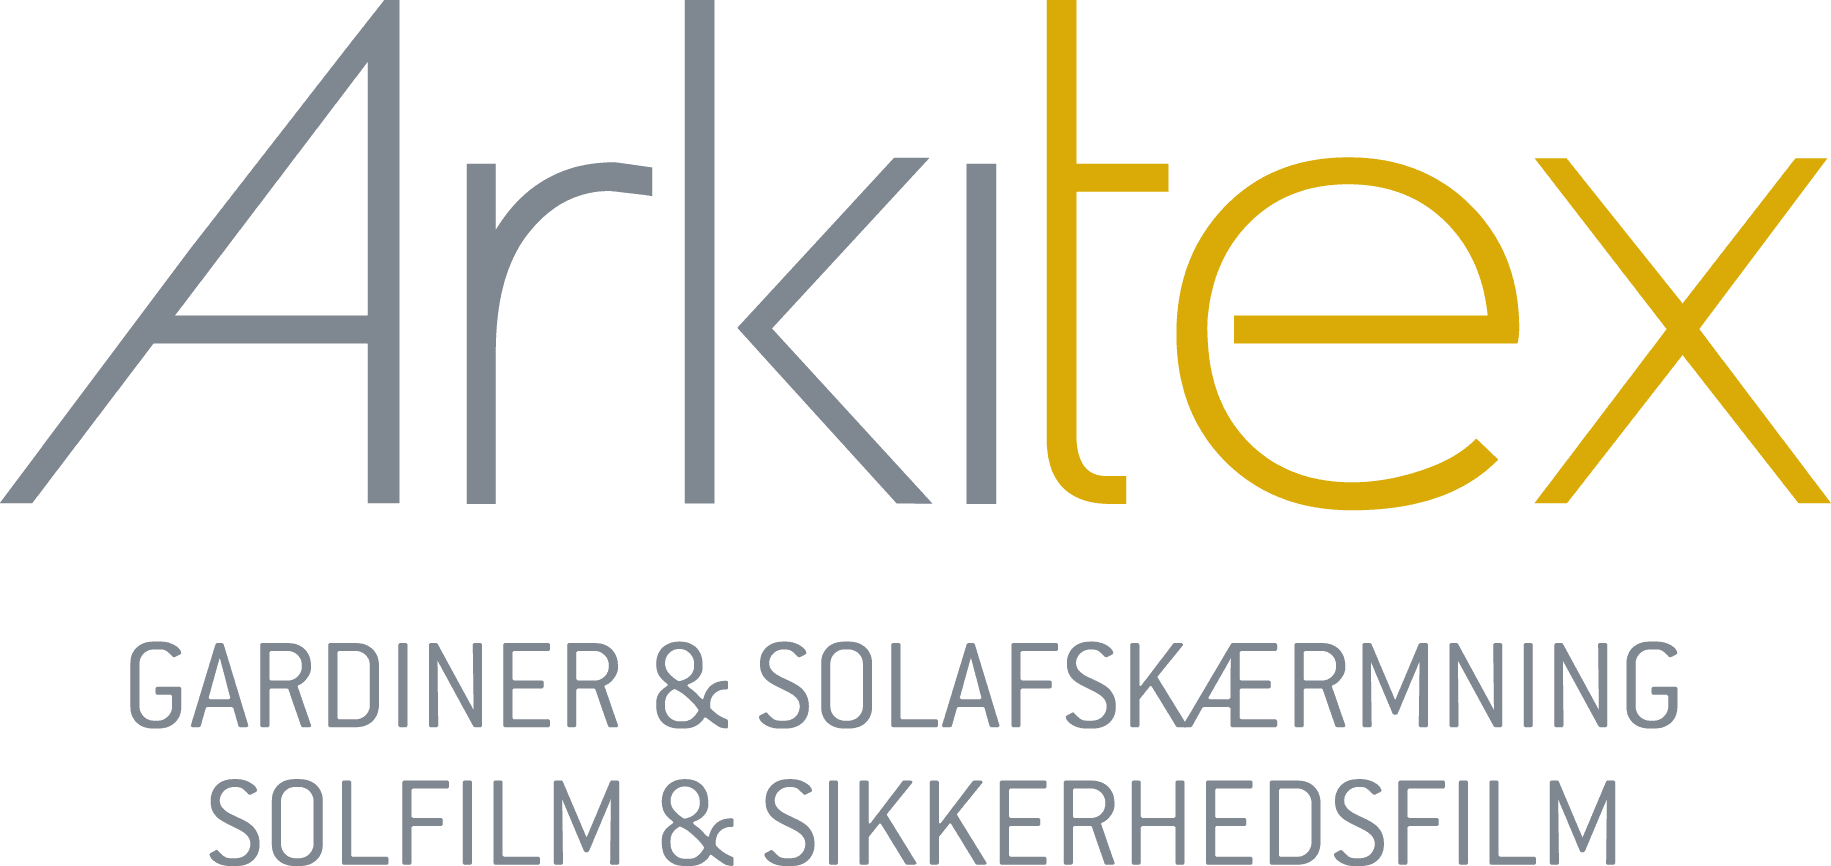 Arkitex logo